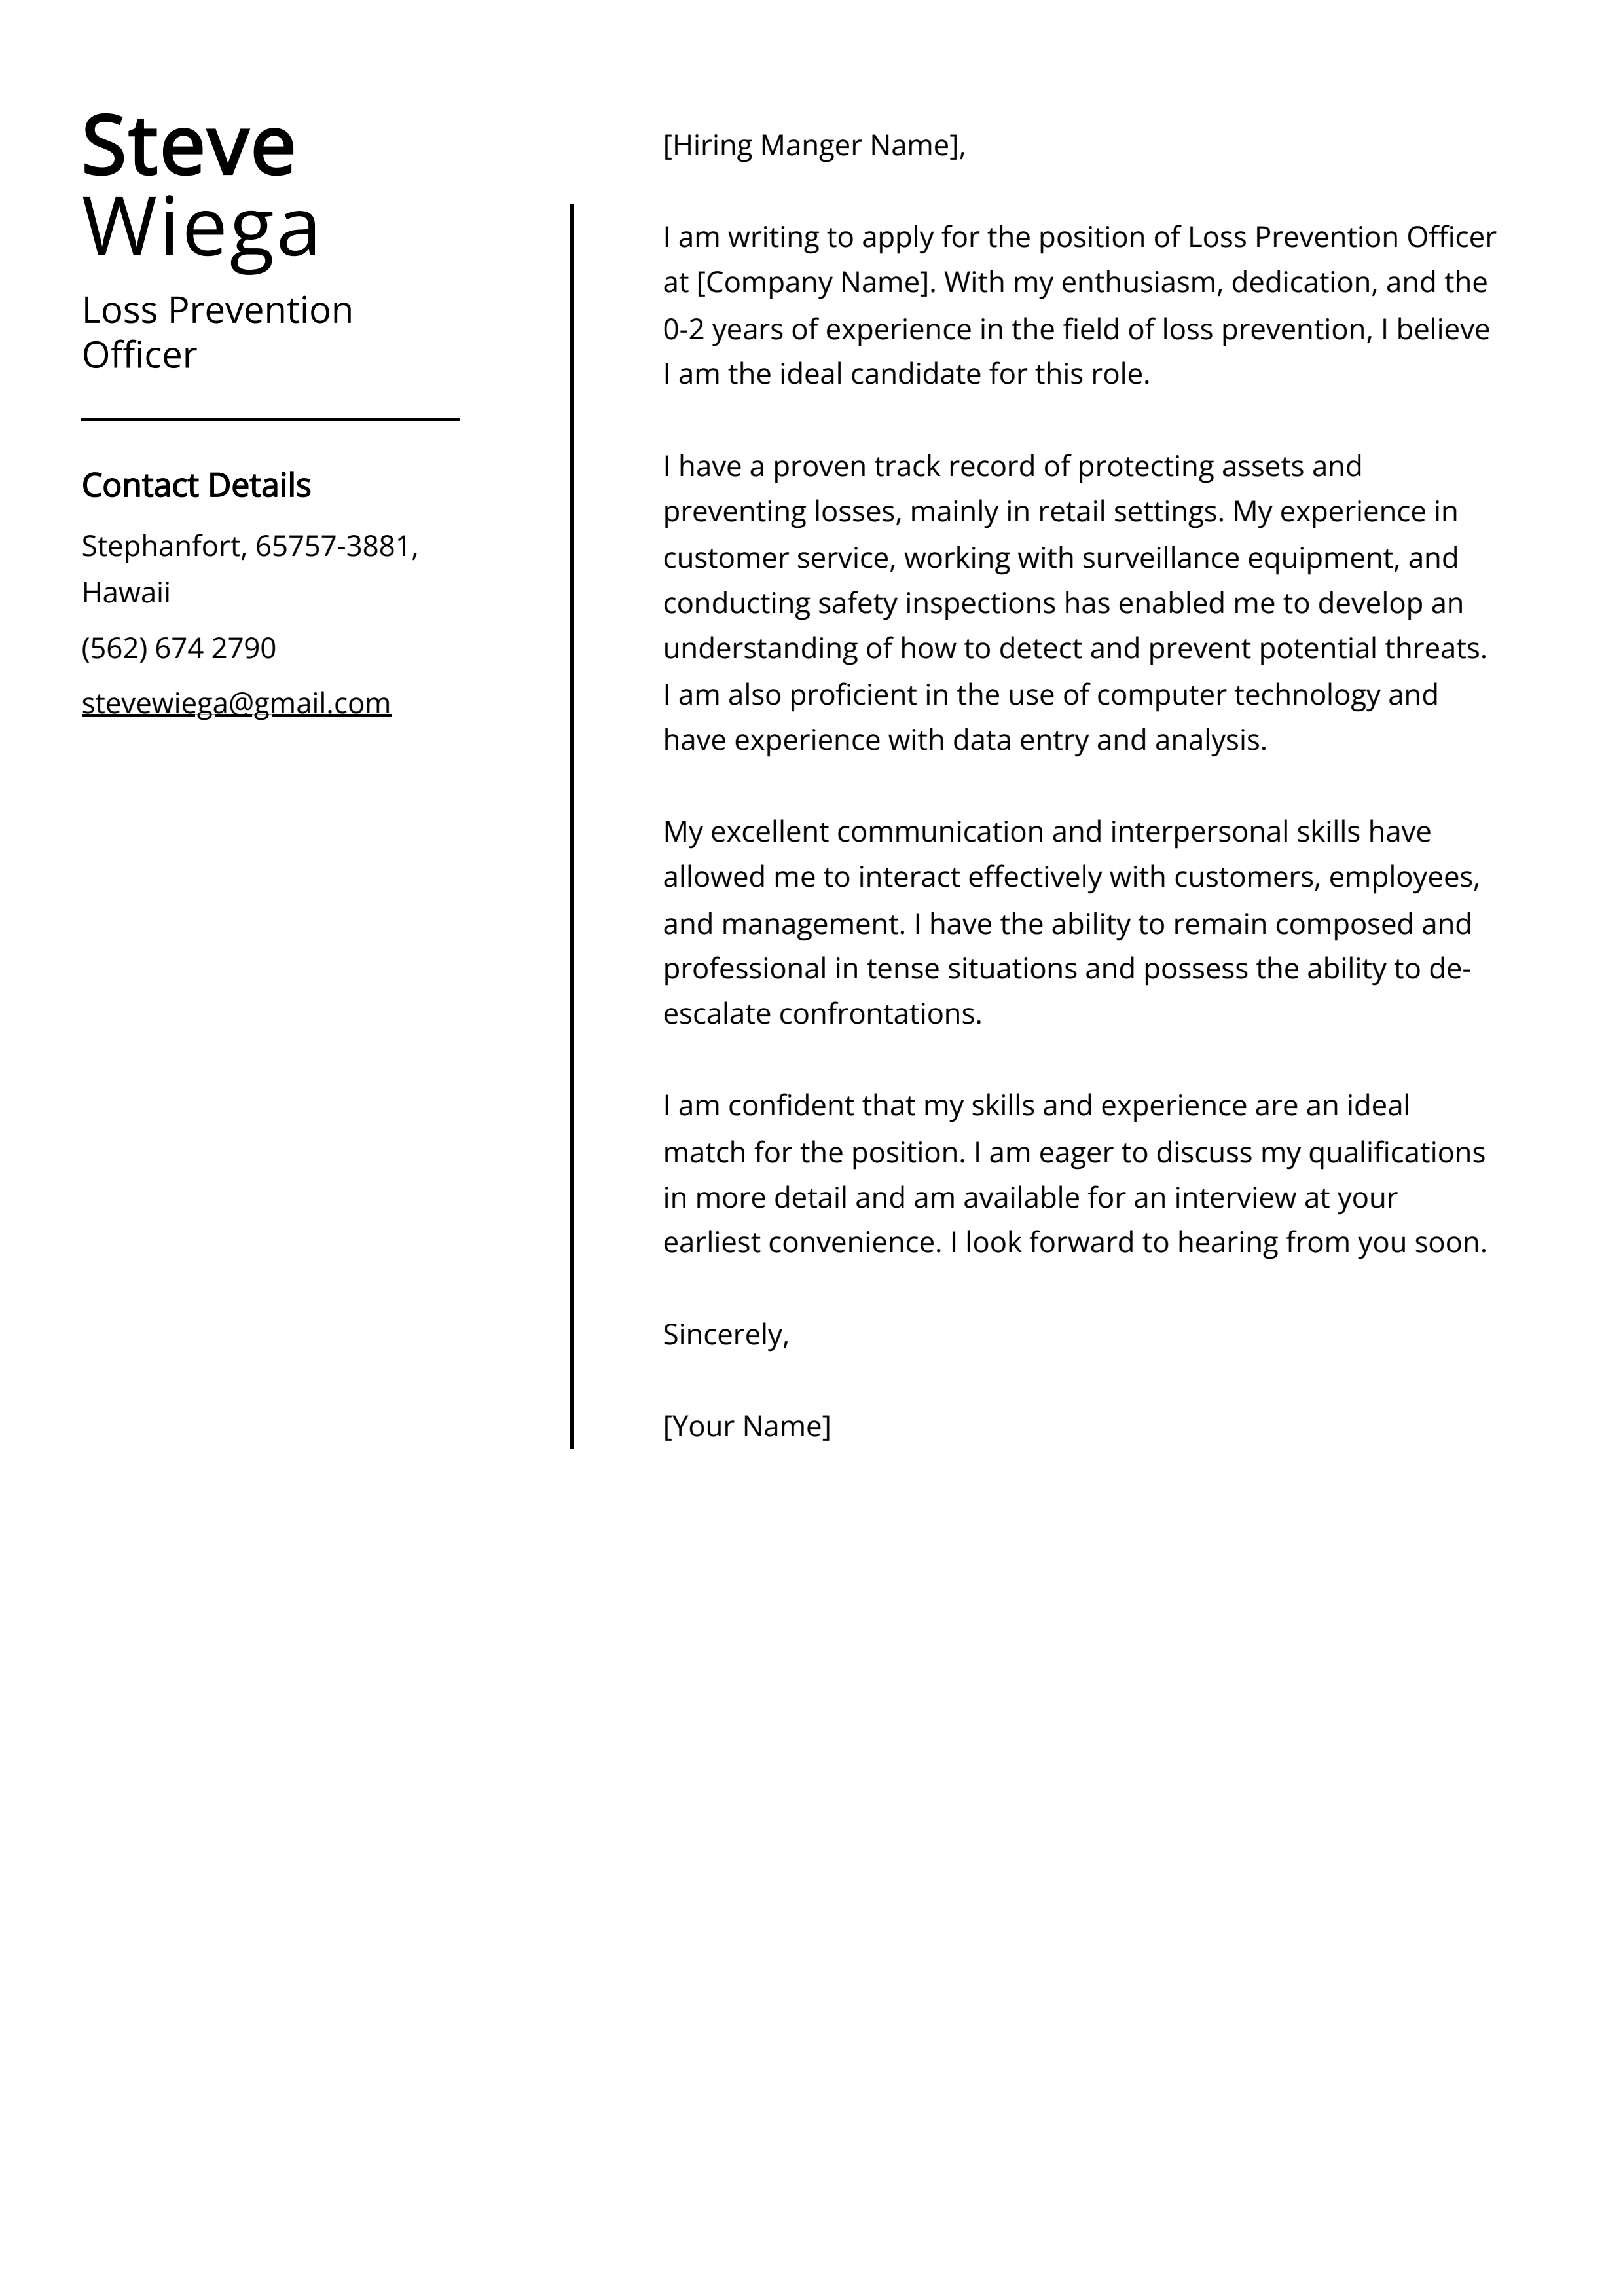 Loss Prevention Officer Cover Letter Example